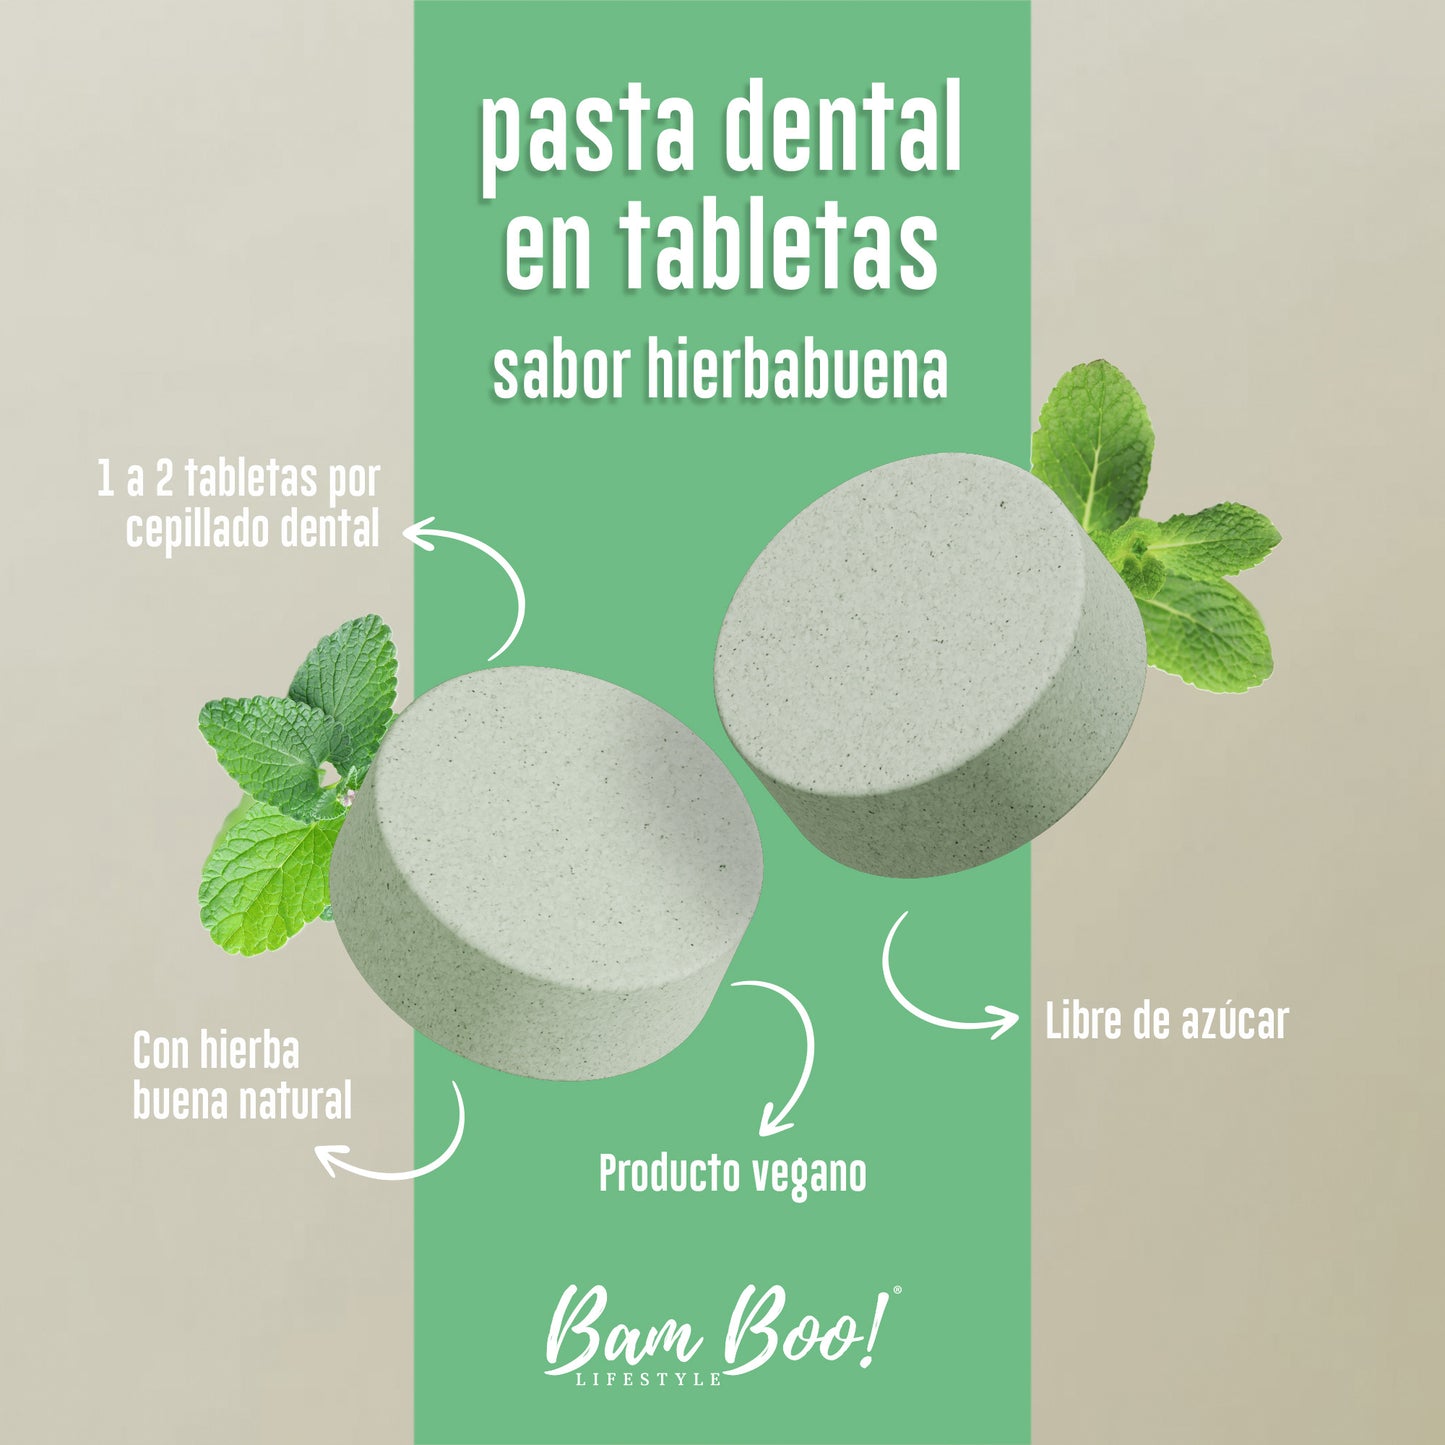 100 Pack Pasta Dental Sólida Hierbabuena 90 Tabletas Mayoreo Bam Boo! Lifestyle